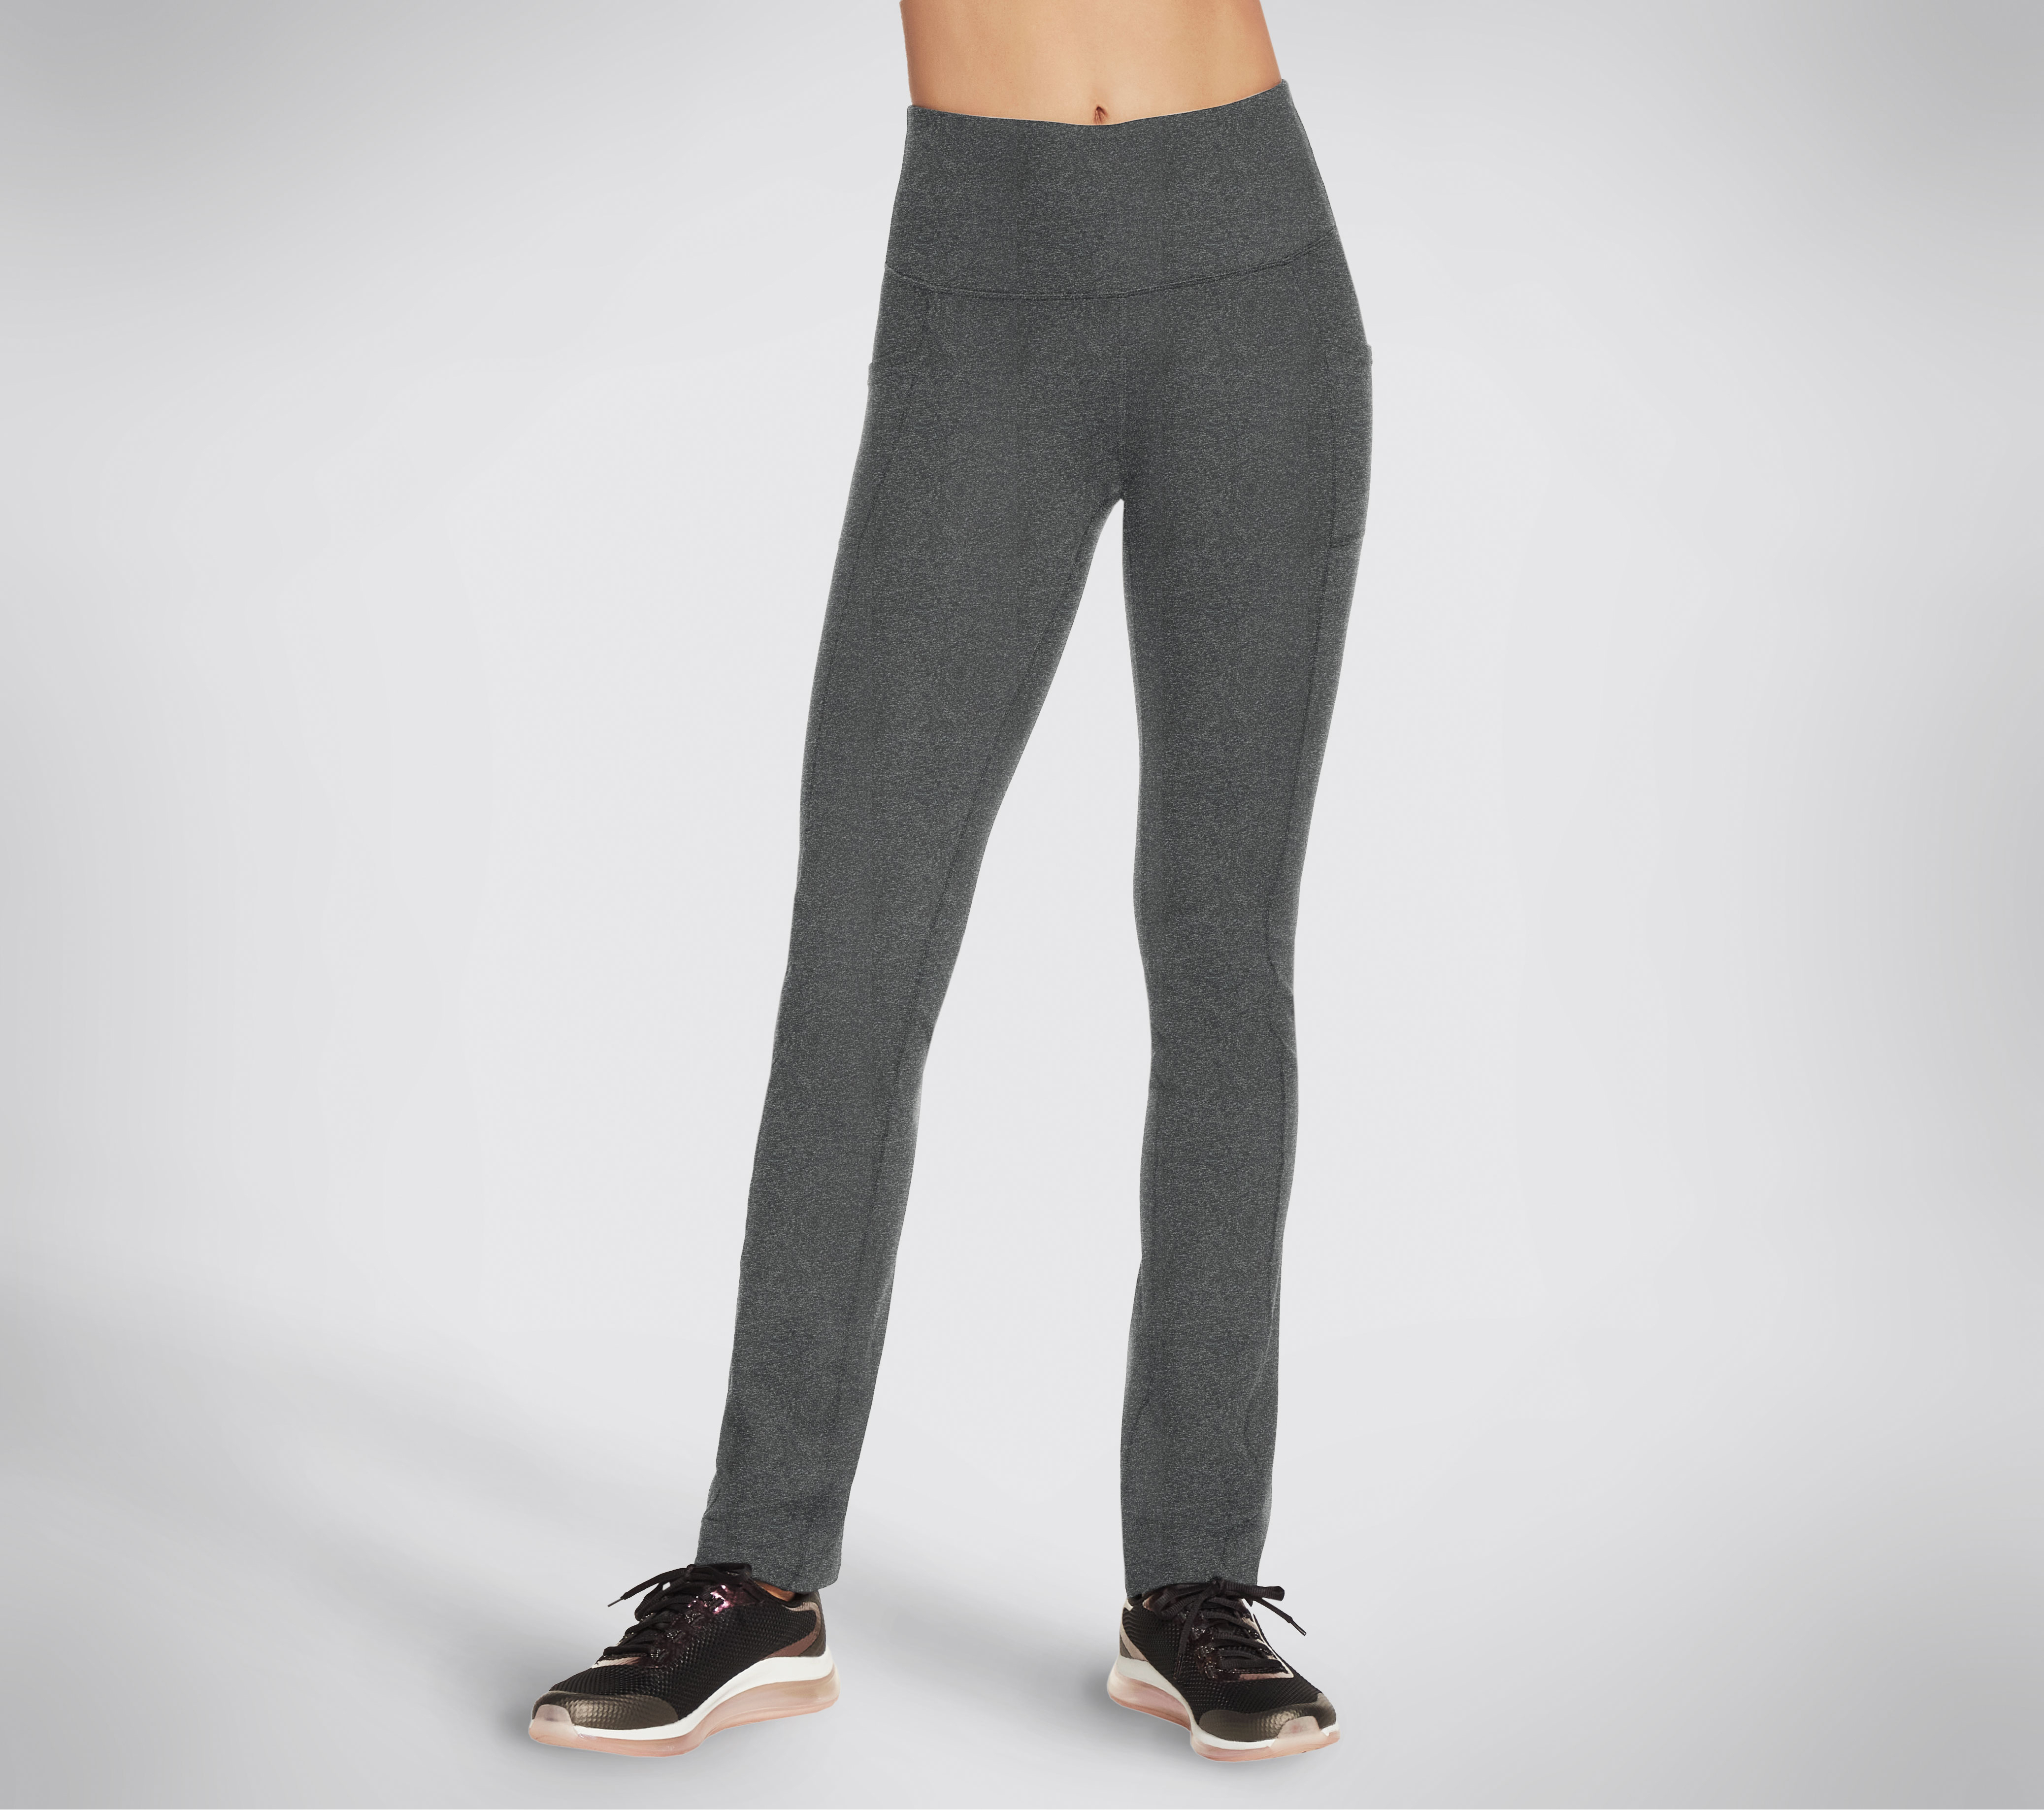 Skechers Women's GO WALK Joy Pants Petite Length Size Small Gray Nylon/Spandex